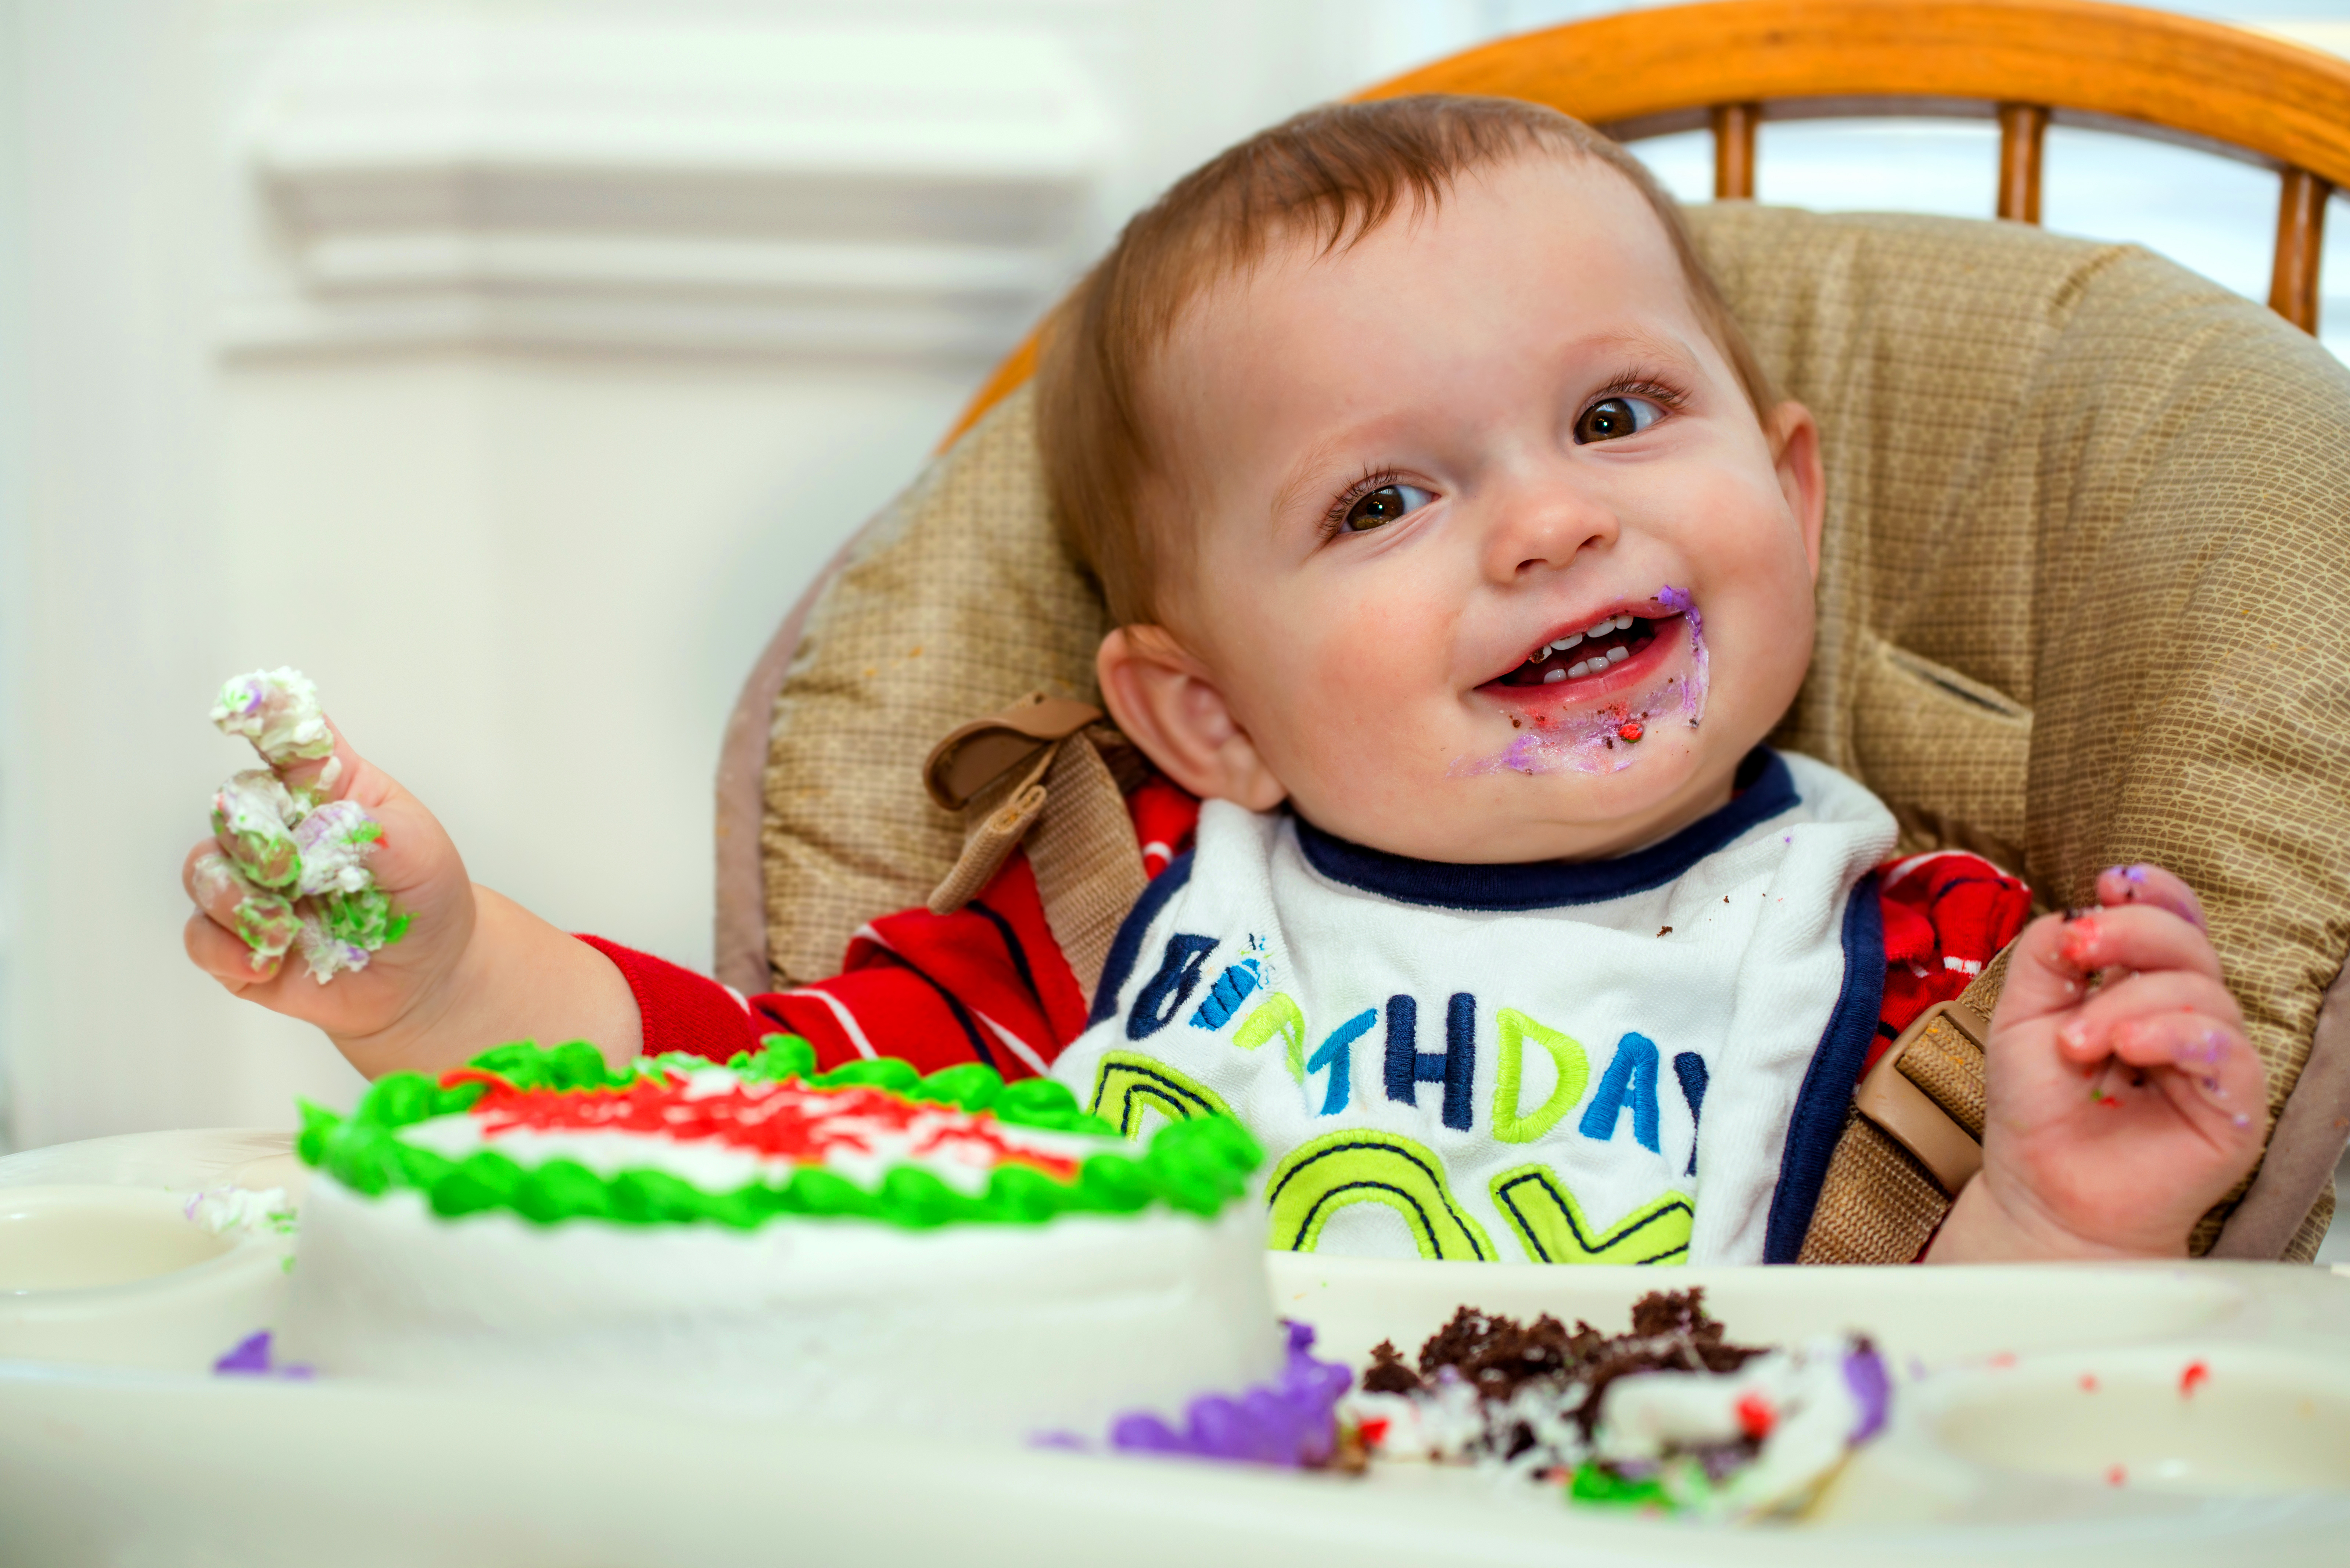 Little boy eating a cake | Source: Shutterstock